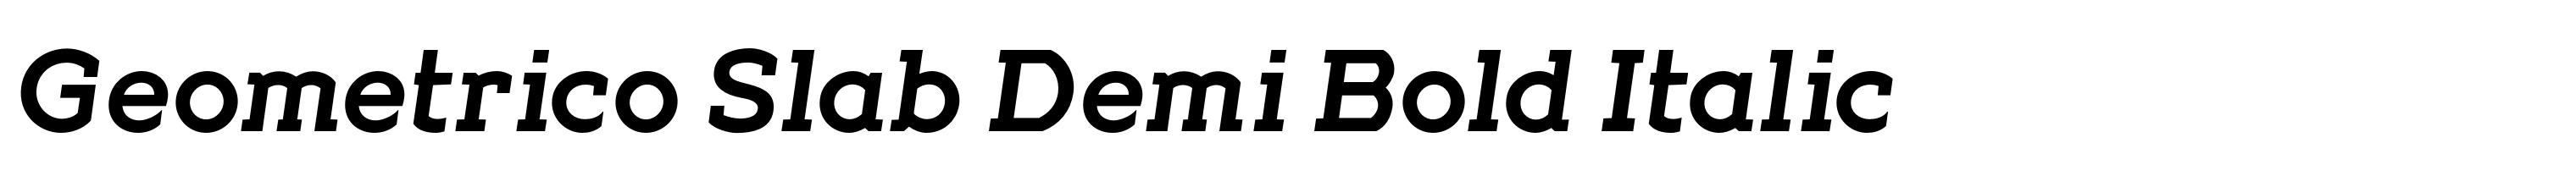 Geometrico Slab Demi Bold Italic